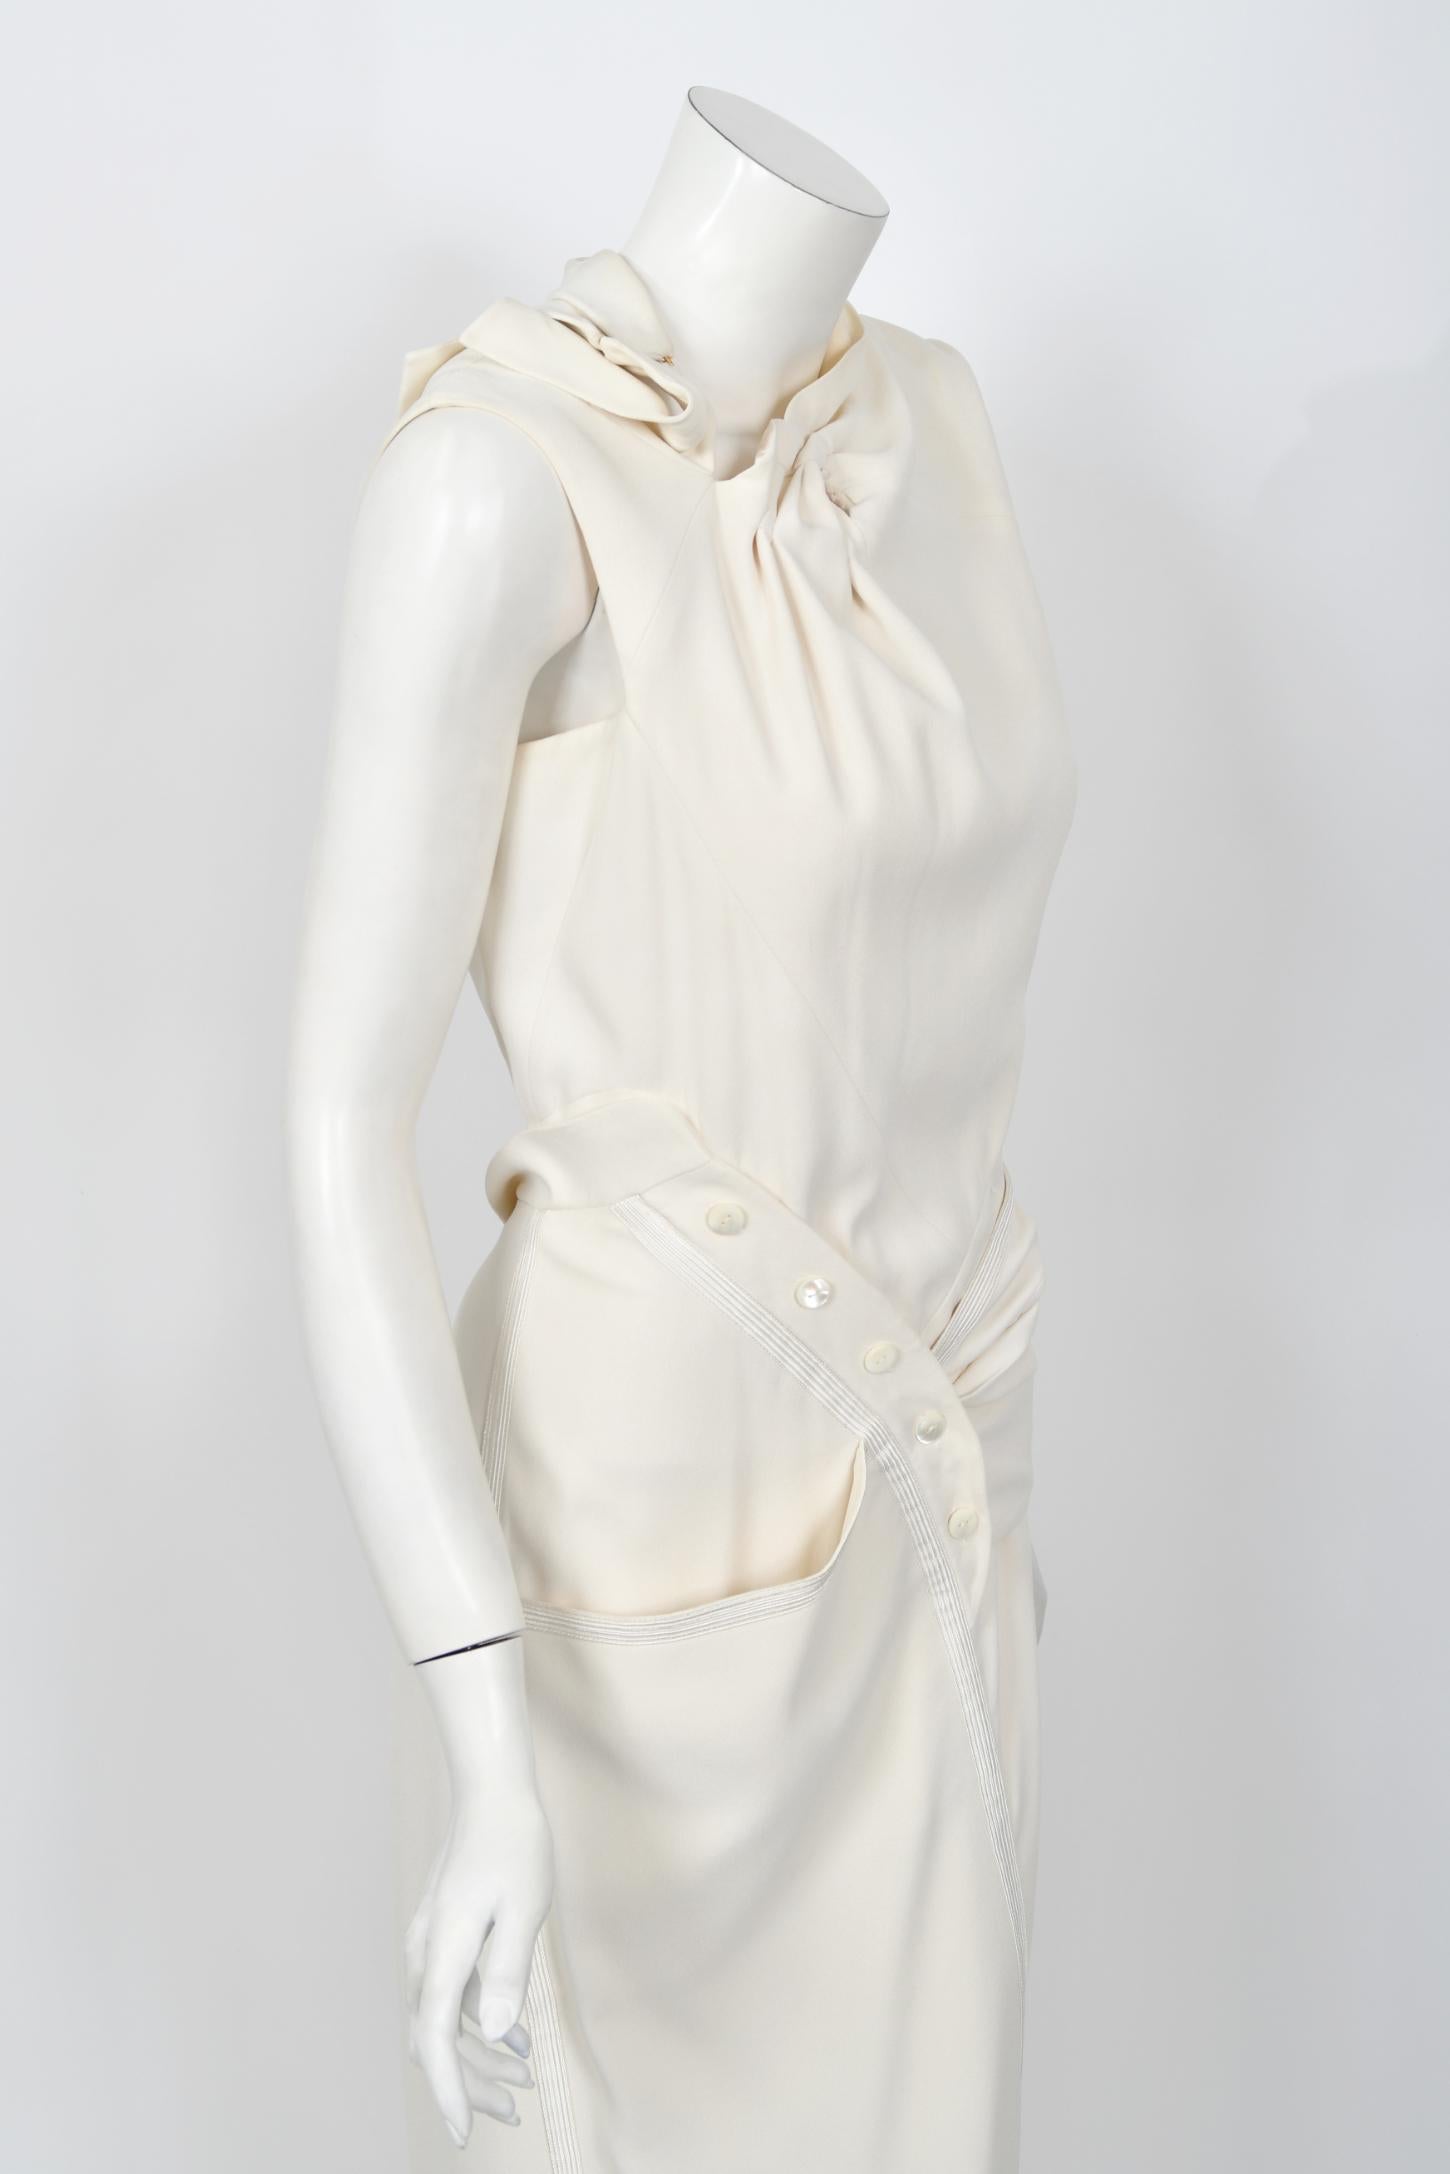 2000 Christian Dior by John Galliano Ivory Crepe Cut-Out Asymmetric Draped Dress 7